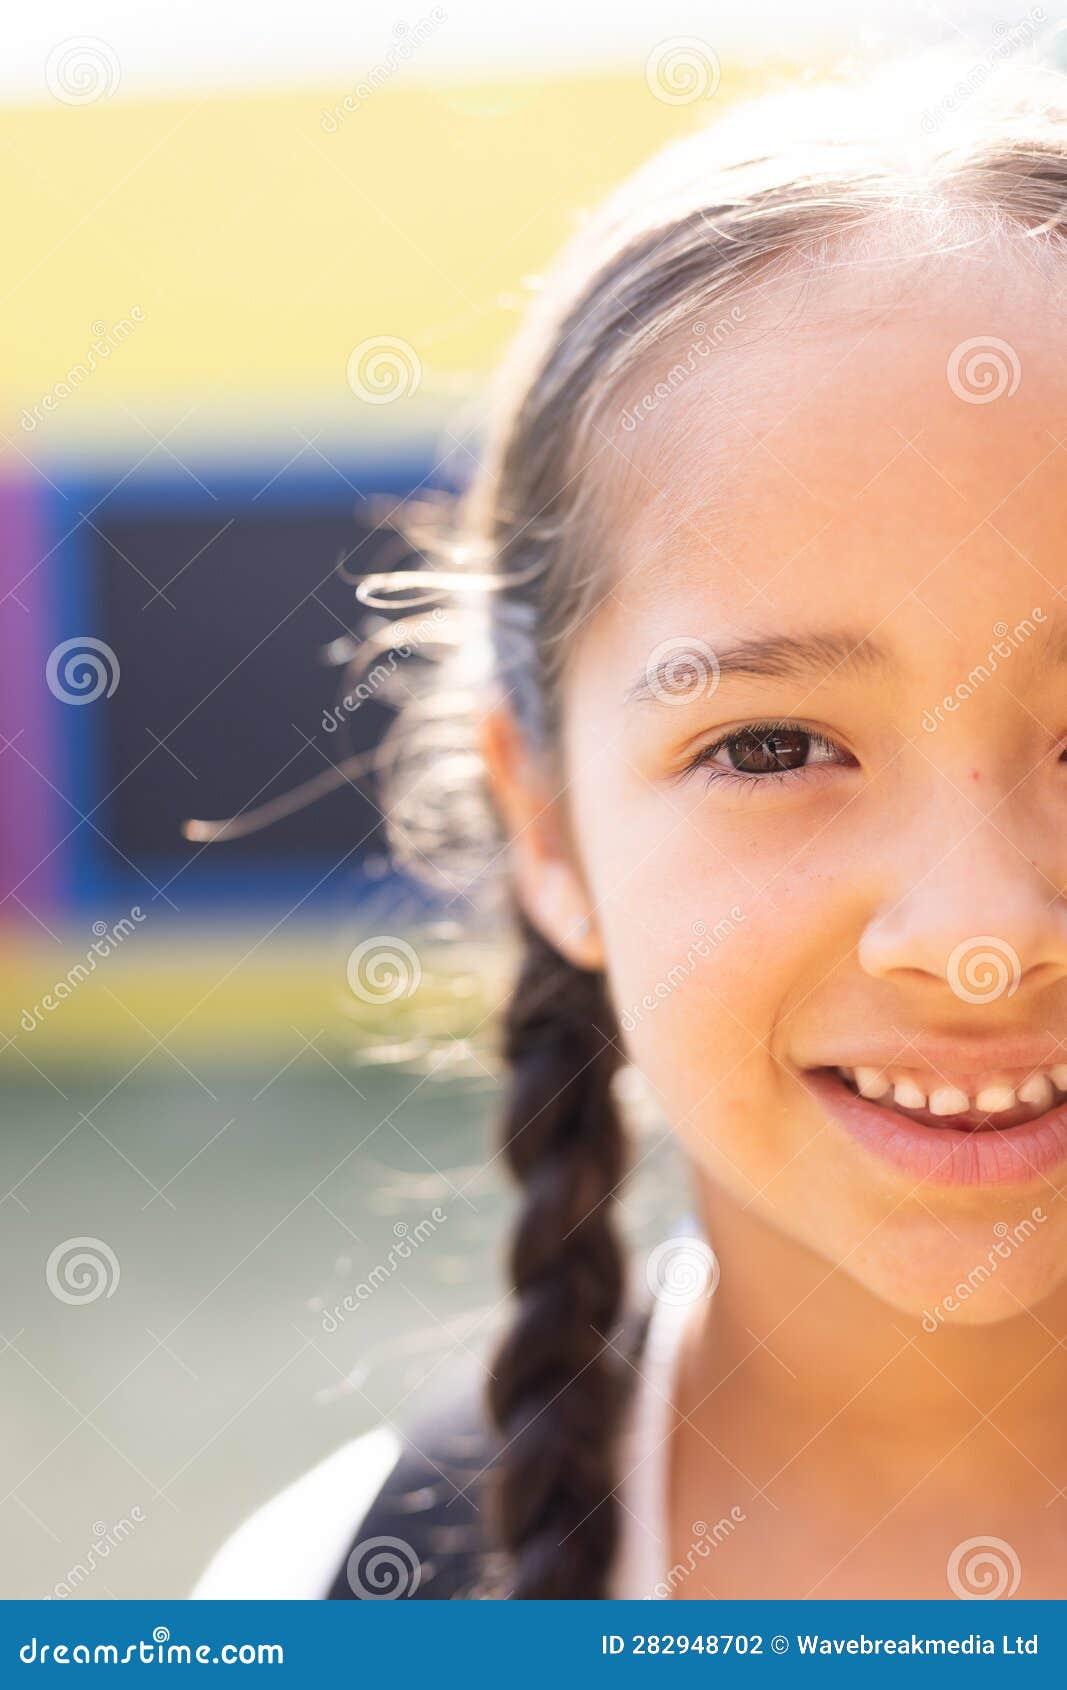 vertical half face portrait of smiling cauasian ary schoolgirl in schoolyard, copy space